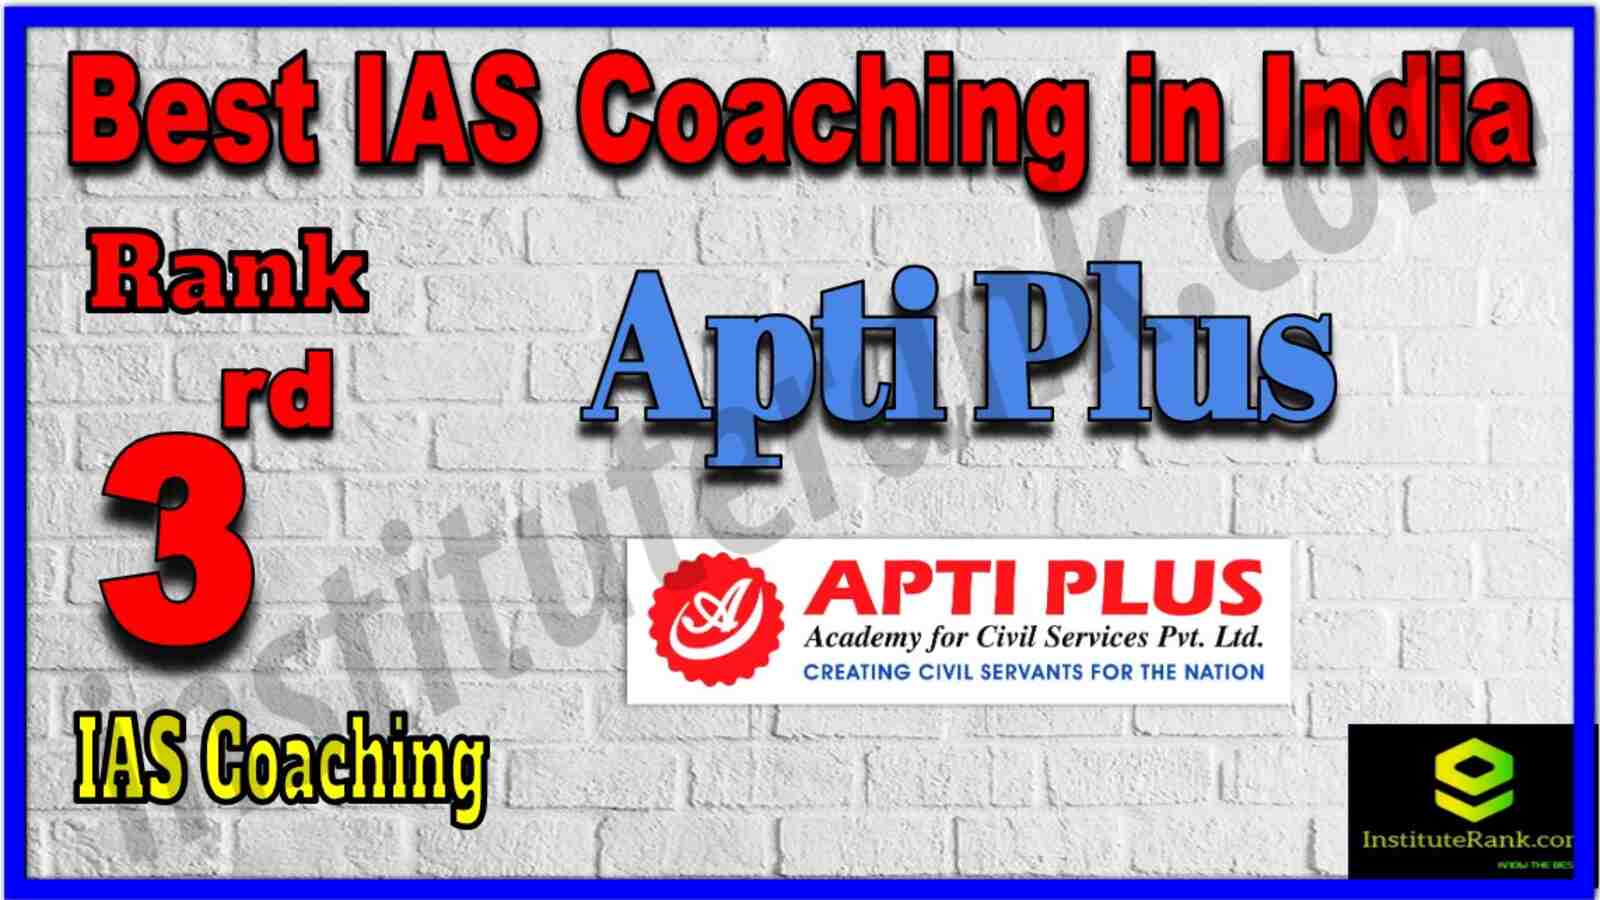 Rank 3 Best IAS coaching in India